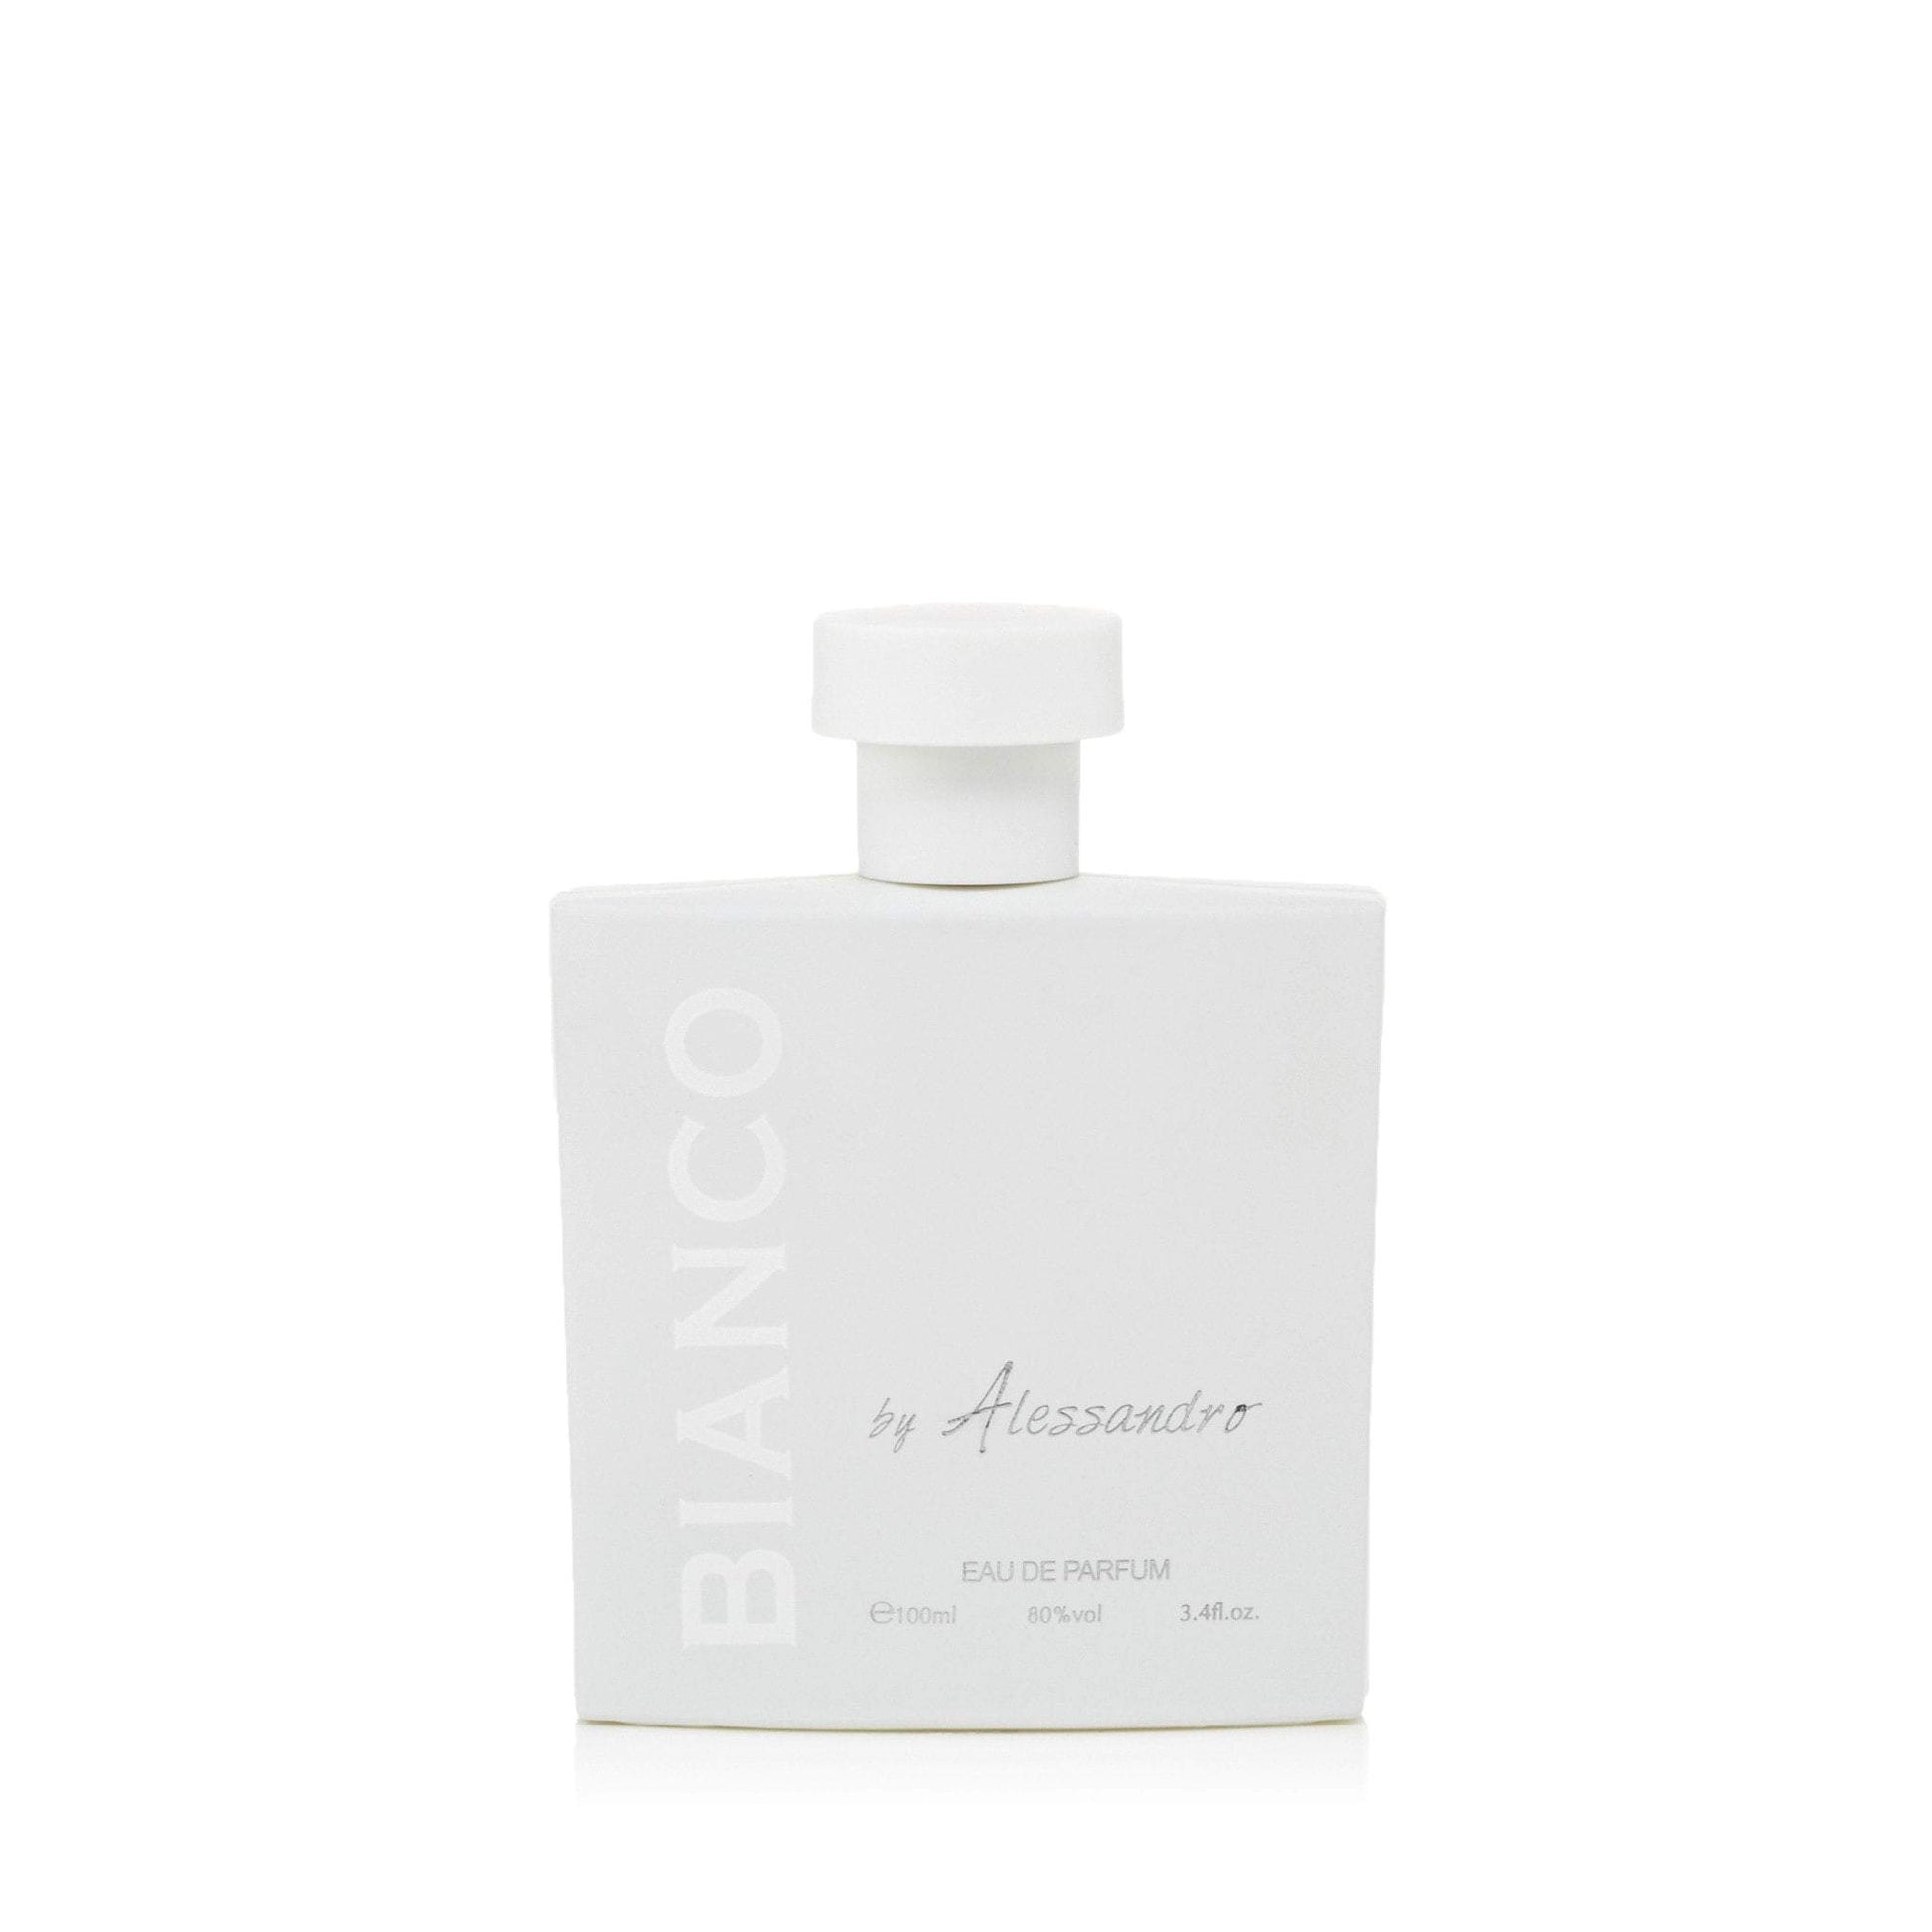 Bianco By Alessandro Eau de Parfum Spray for Men, Product image 2